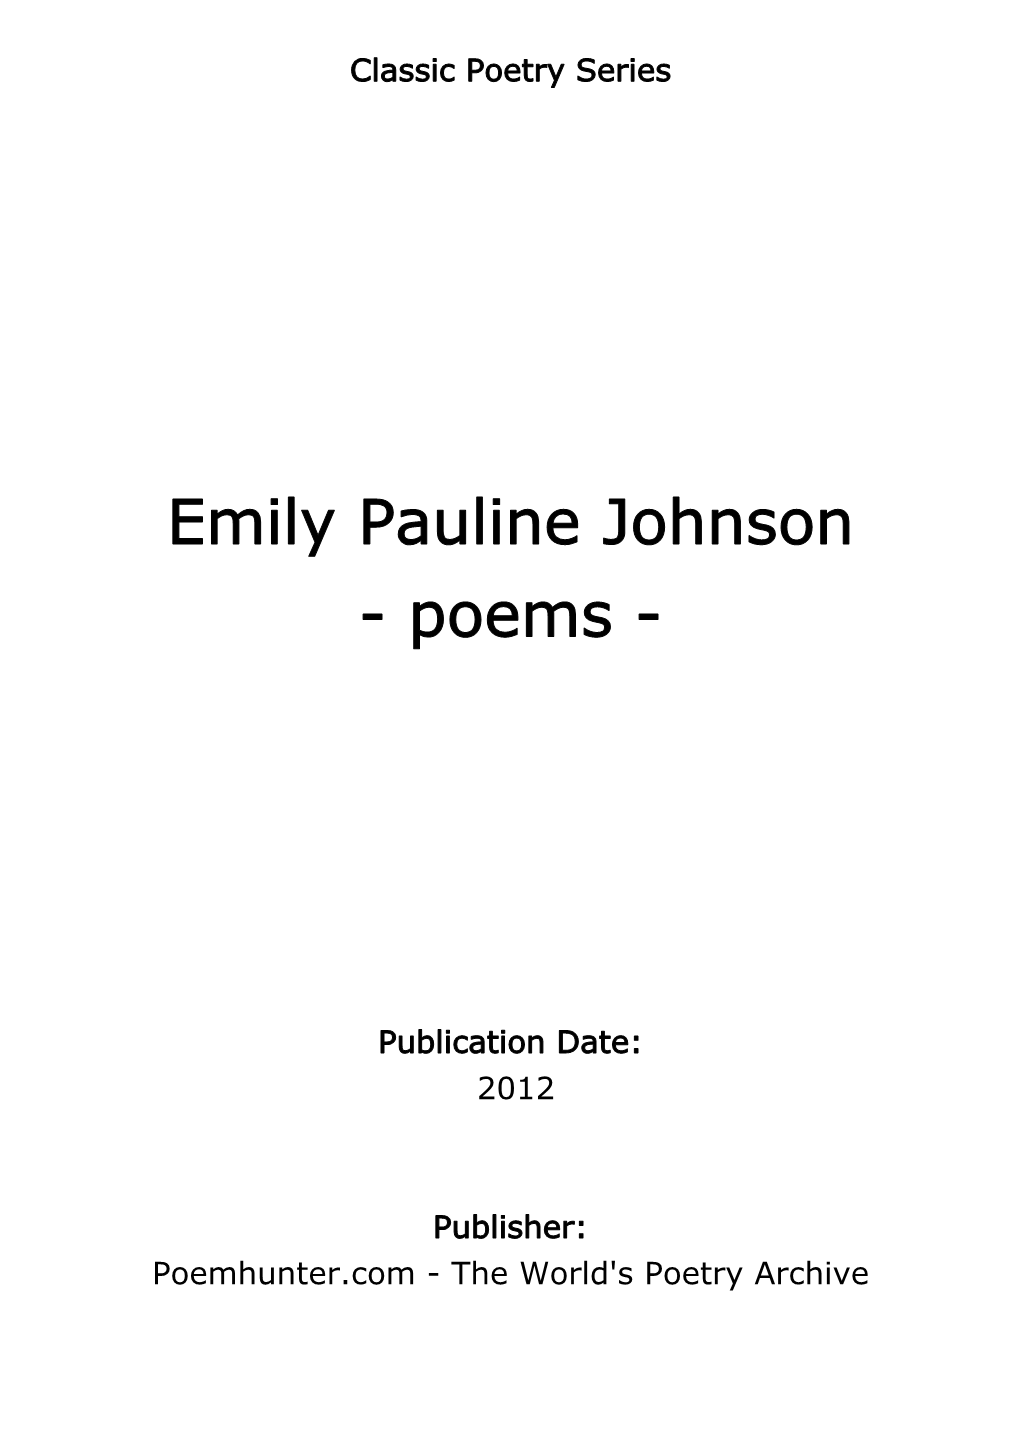 Emily Pauline Johnson - Poems